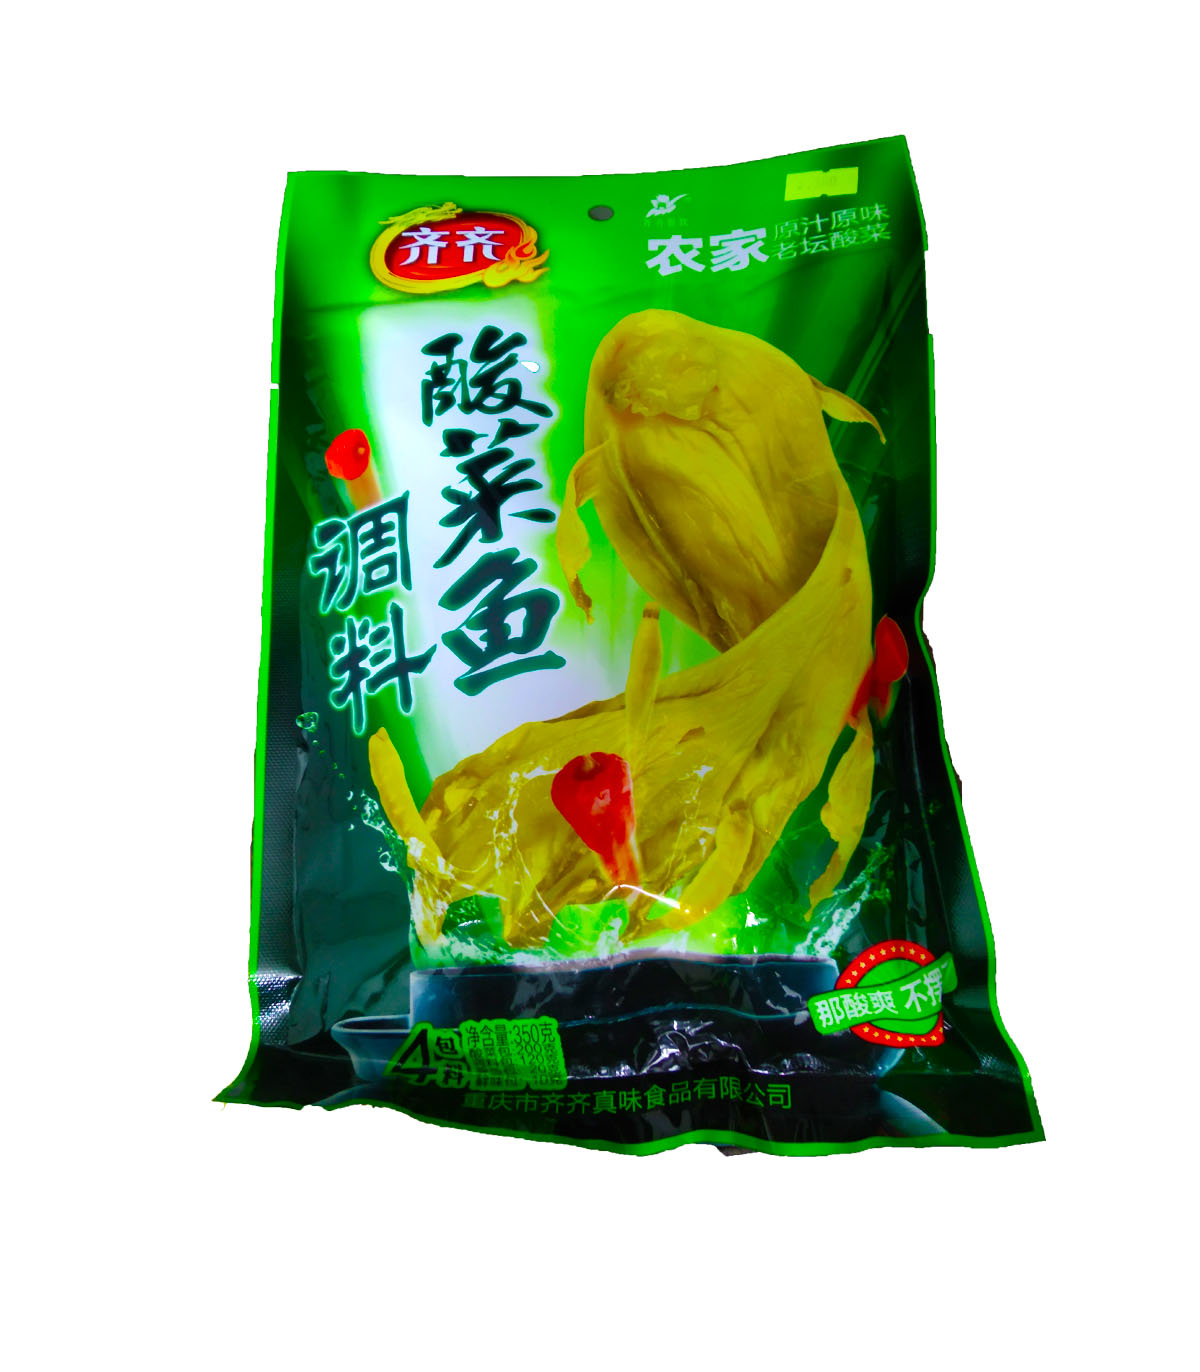 齐齐酸菜鱼调料包 Seasoning Vegetable 350gm